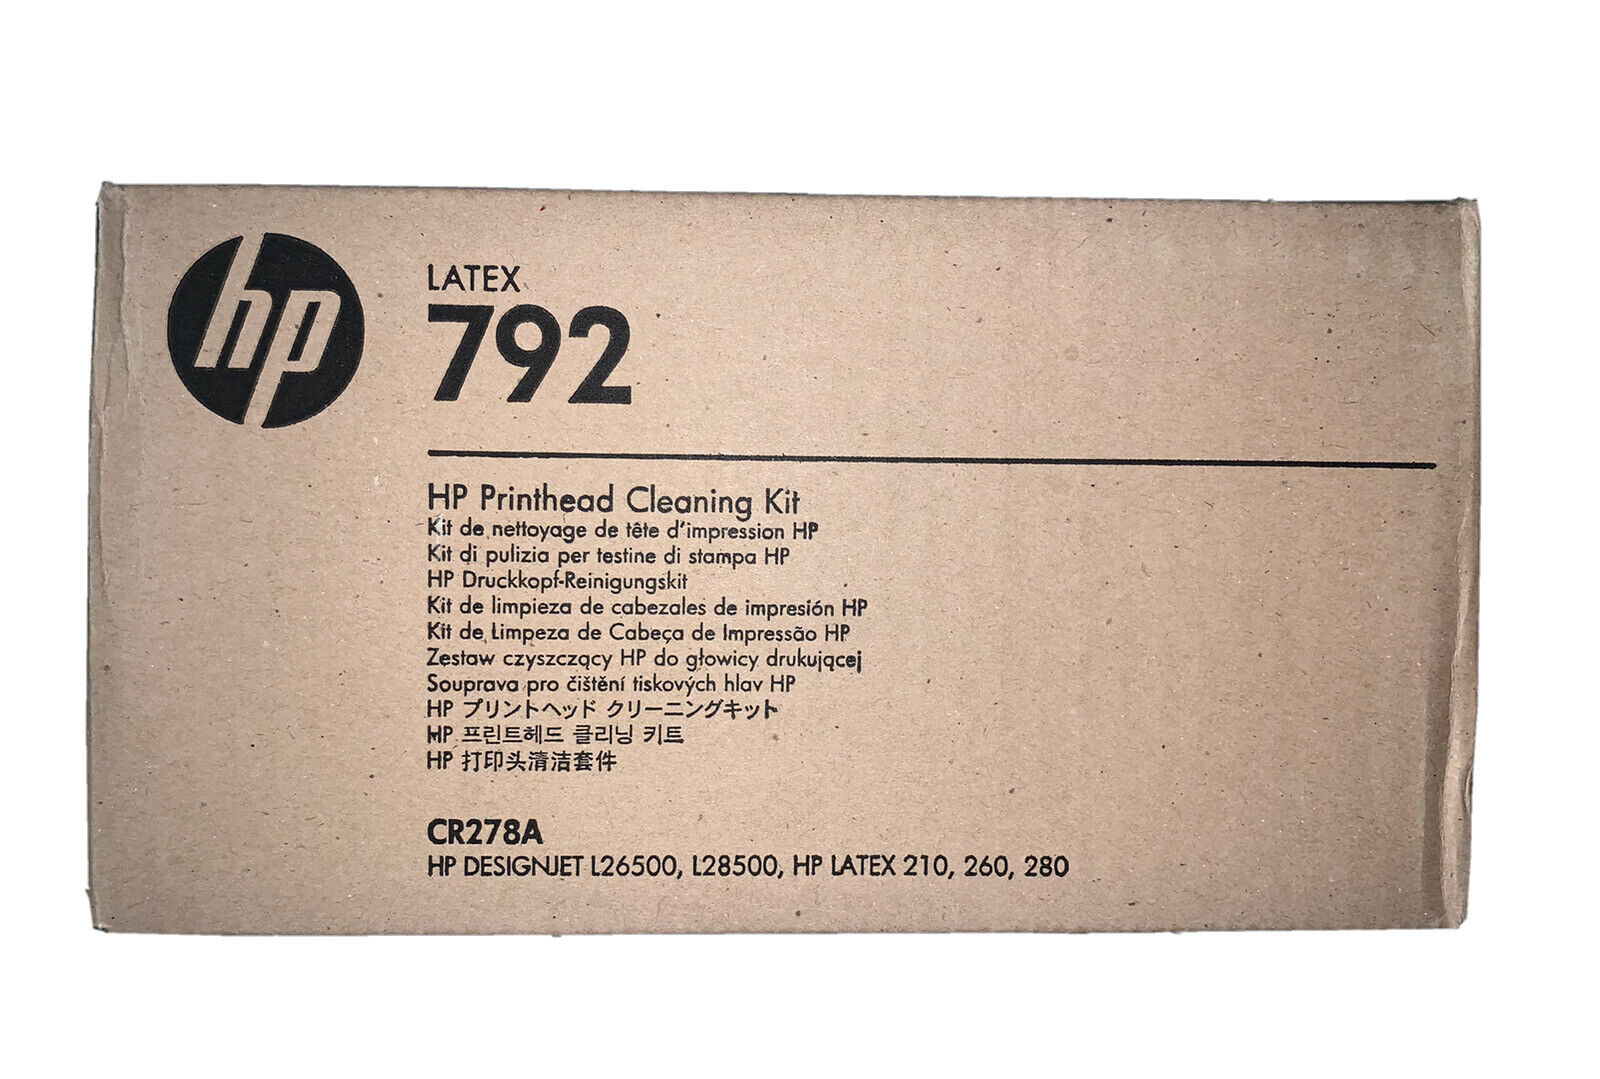 Printer Head Cleaning Set HP Designjet L25500 L26500 L28500 / No. 792 CR278A Kit